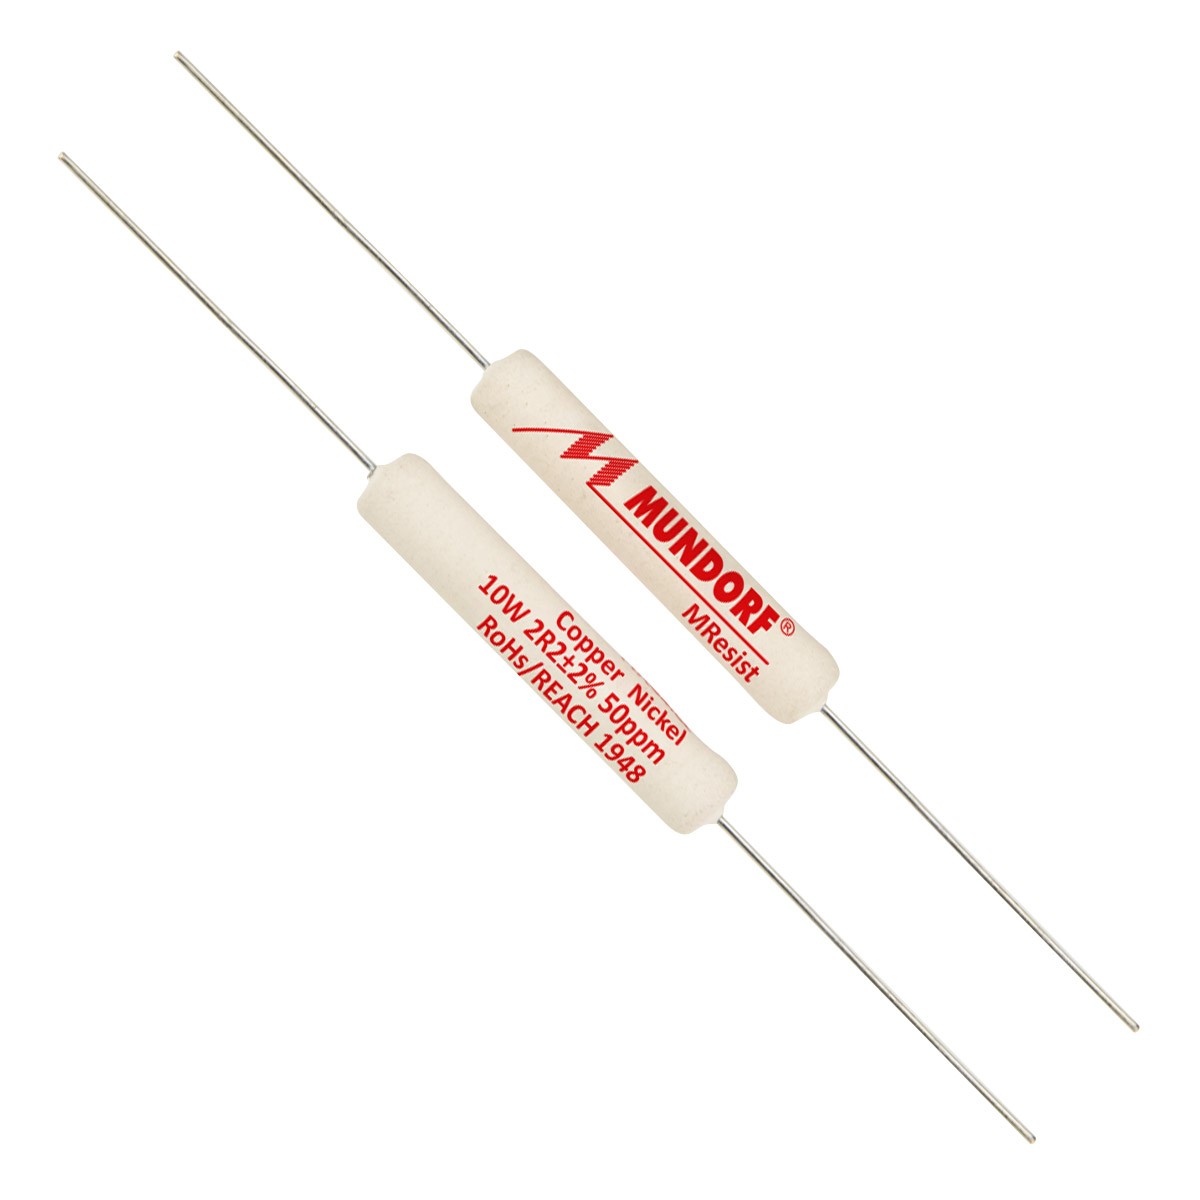 MUNDORF MRESIST CLASSIC Resistor 10W 10 Ohm